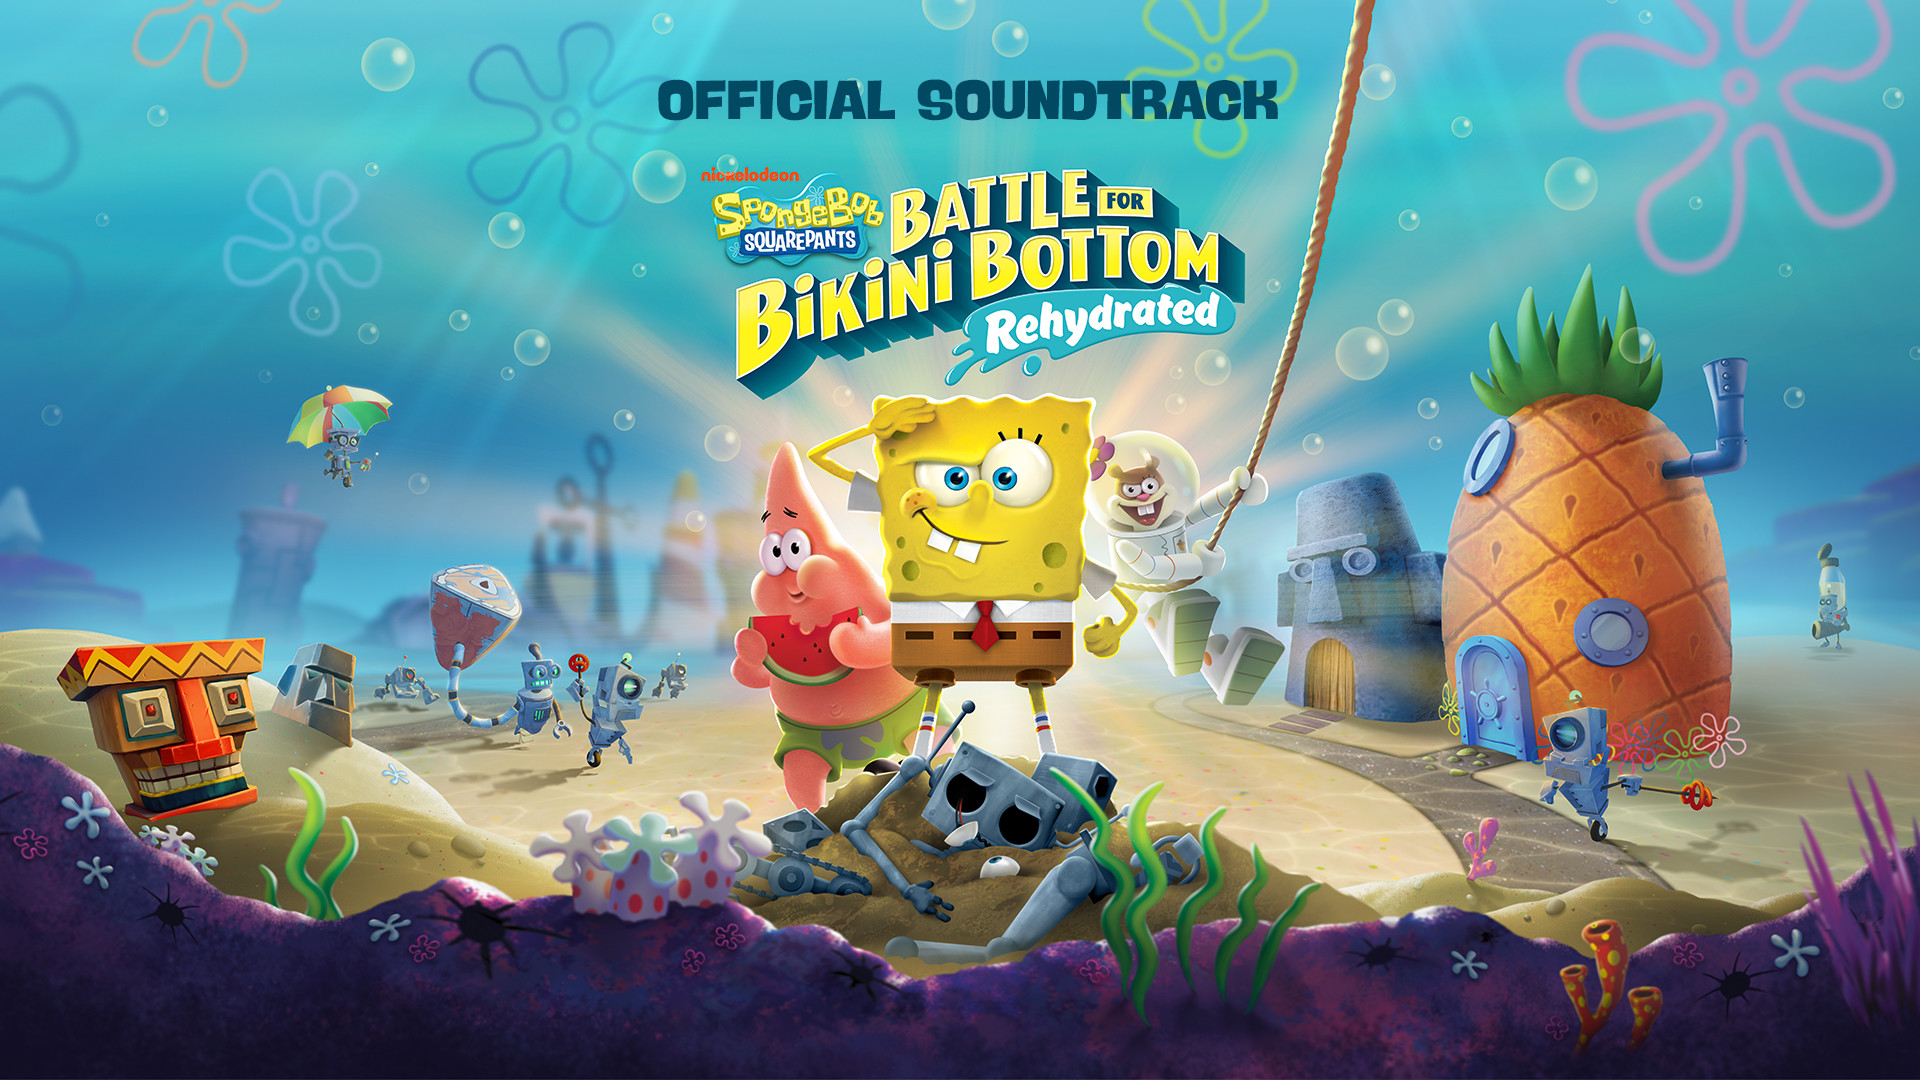 SpongeBob SquarePants: Battle for Bikini Bottom - Rehydrated Soundtrack Featured Screenshot #1